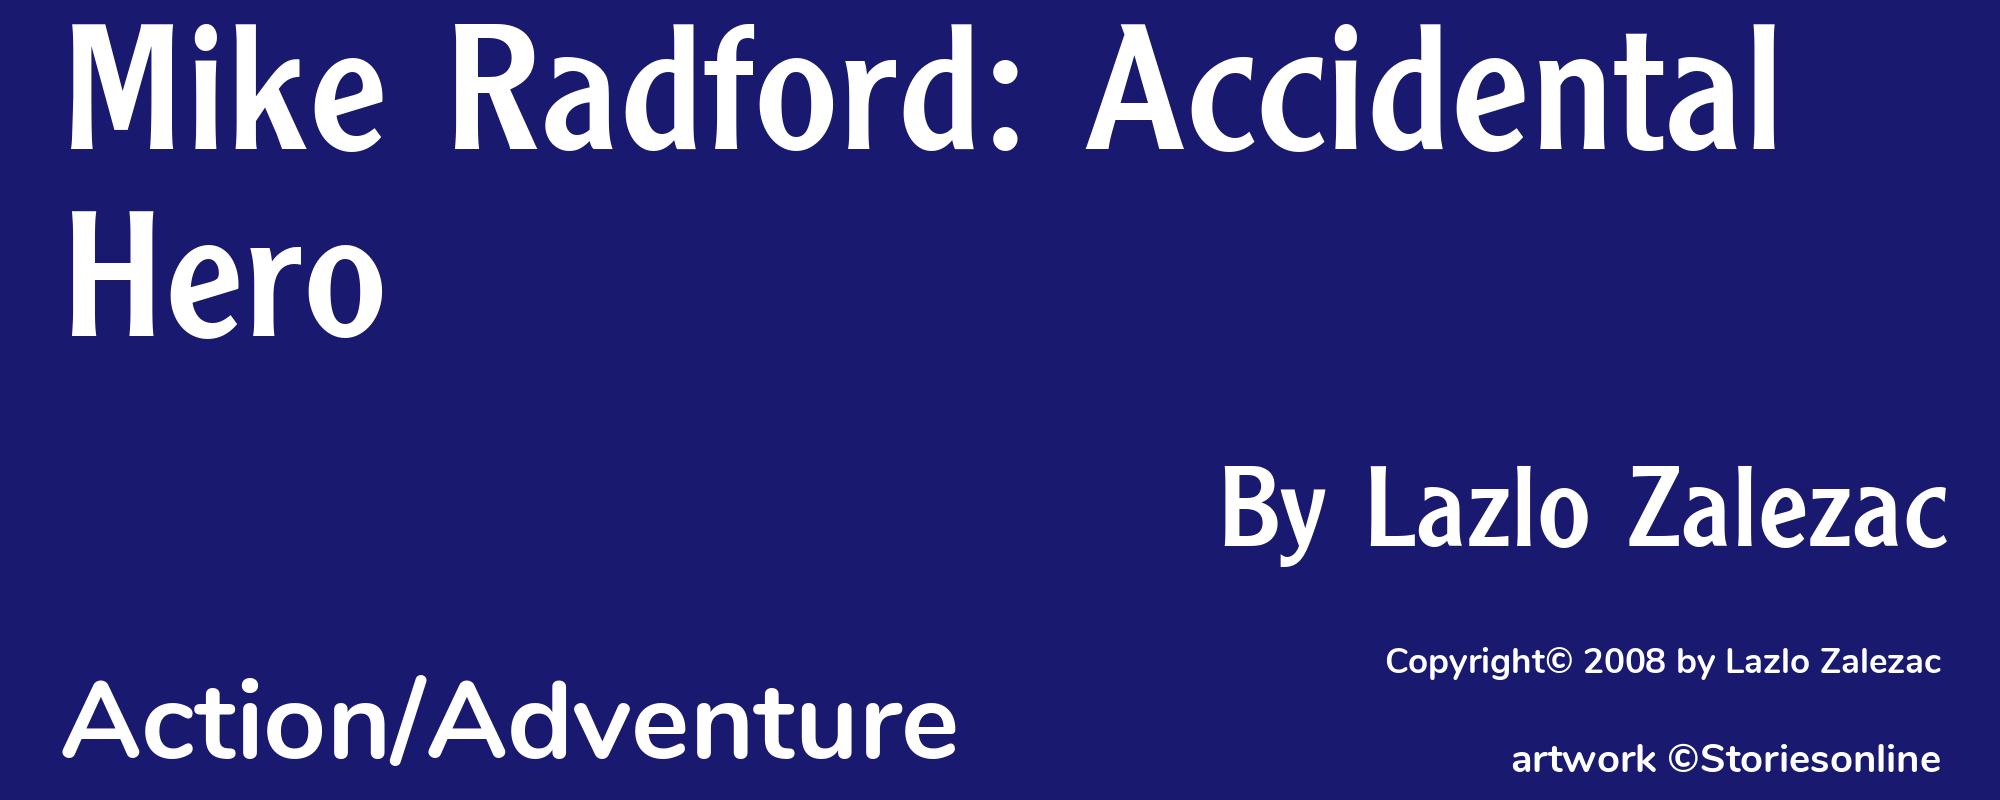 Mike Radford: Accidental Hero - Cover